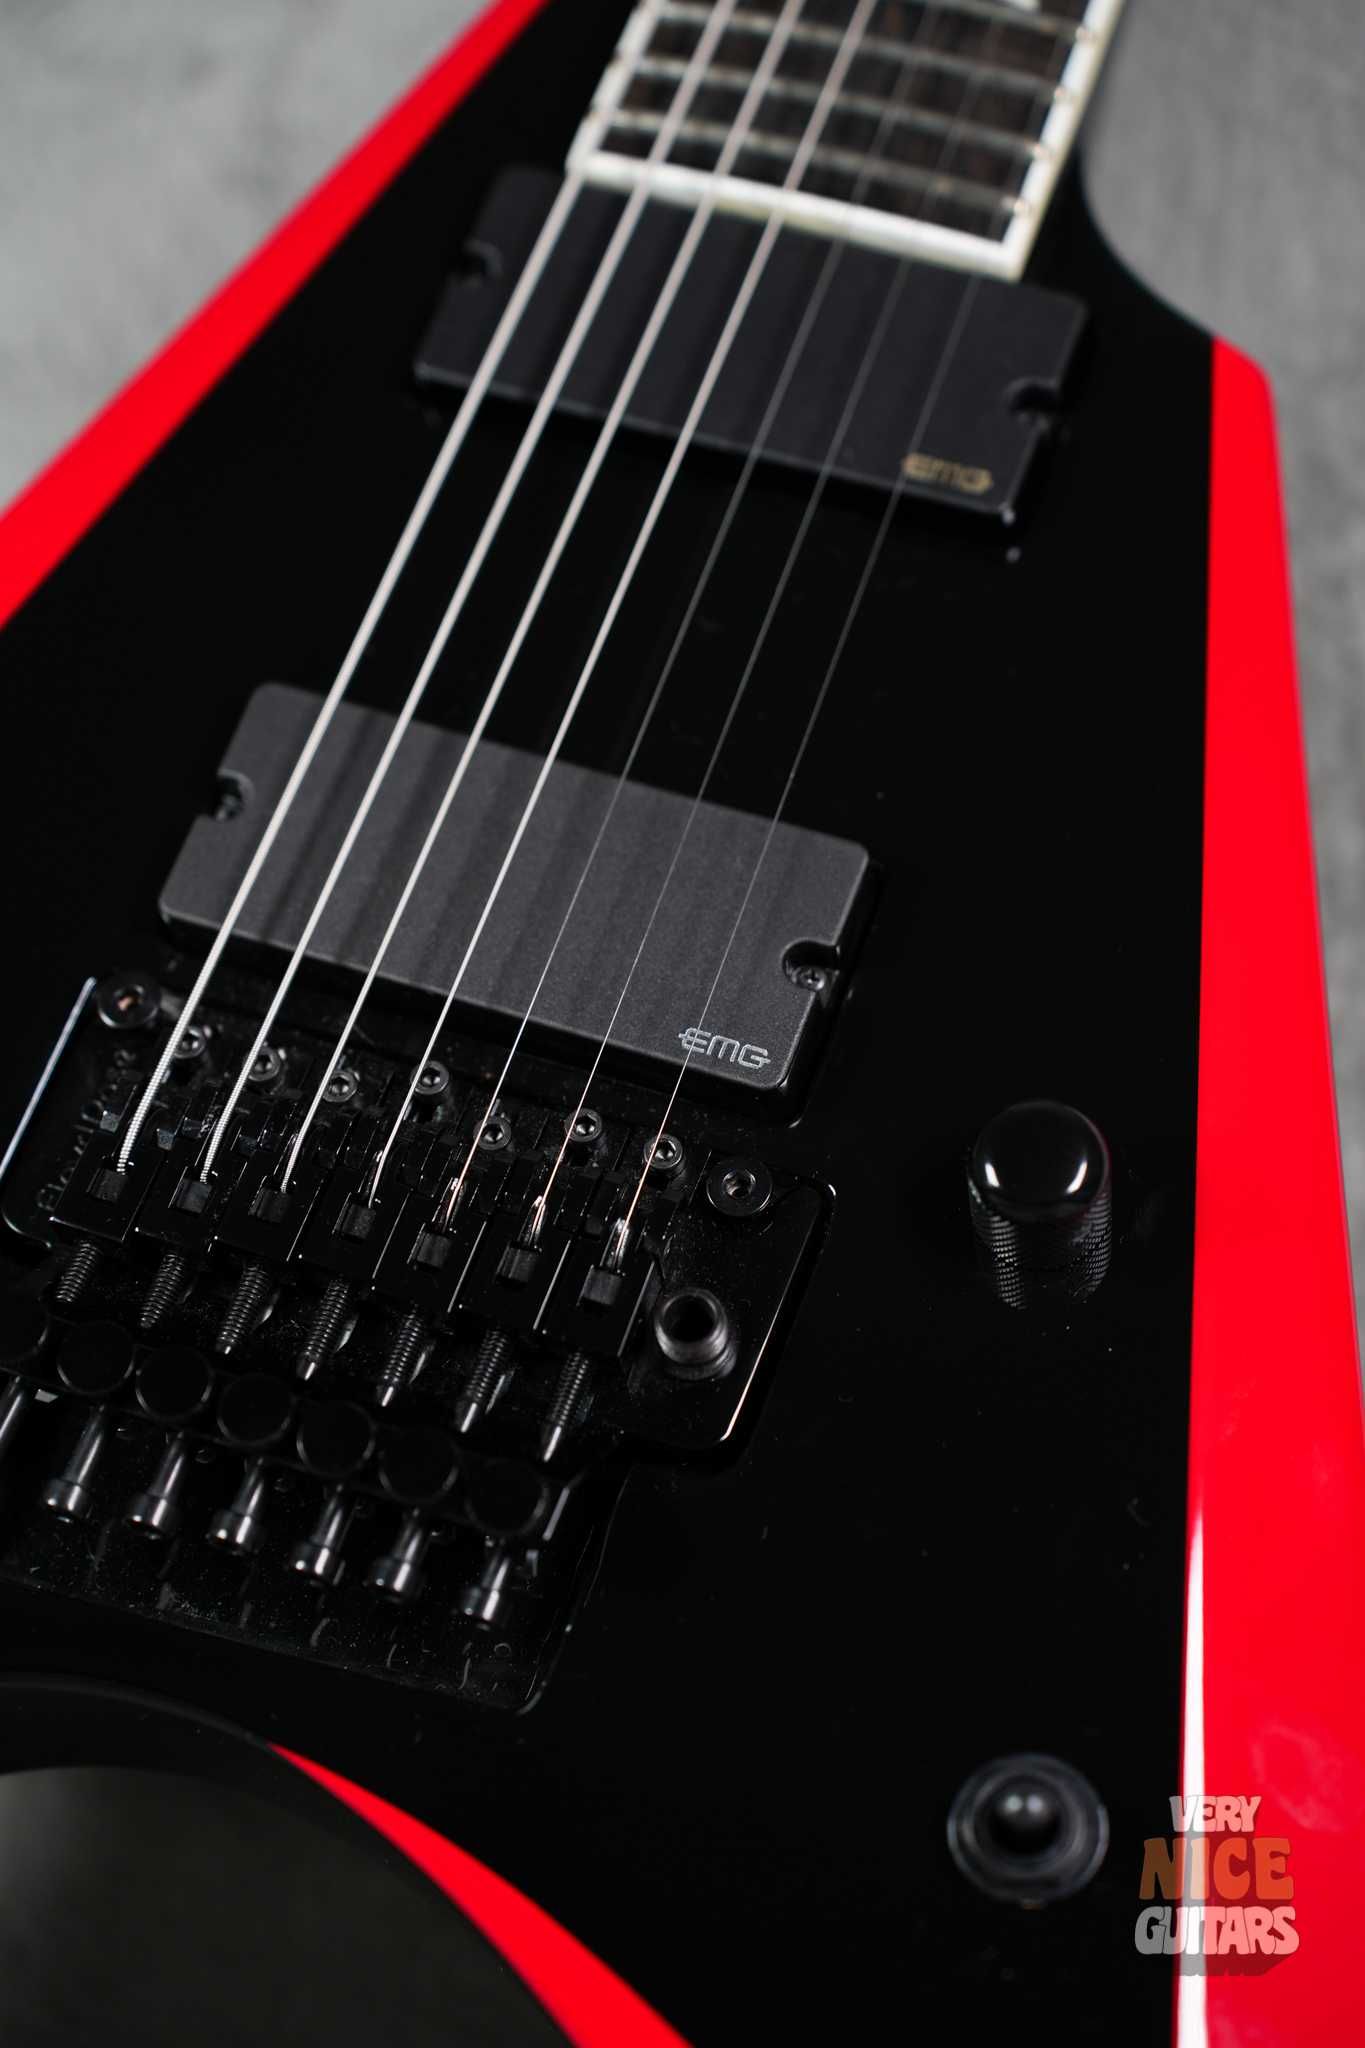 ESP E-II Arrow-7 Babymetal signature gitara elektryczna